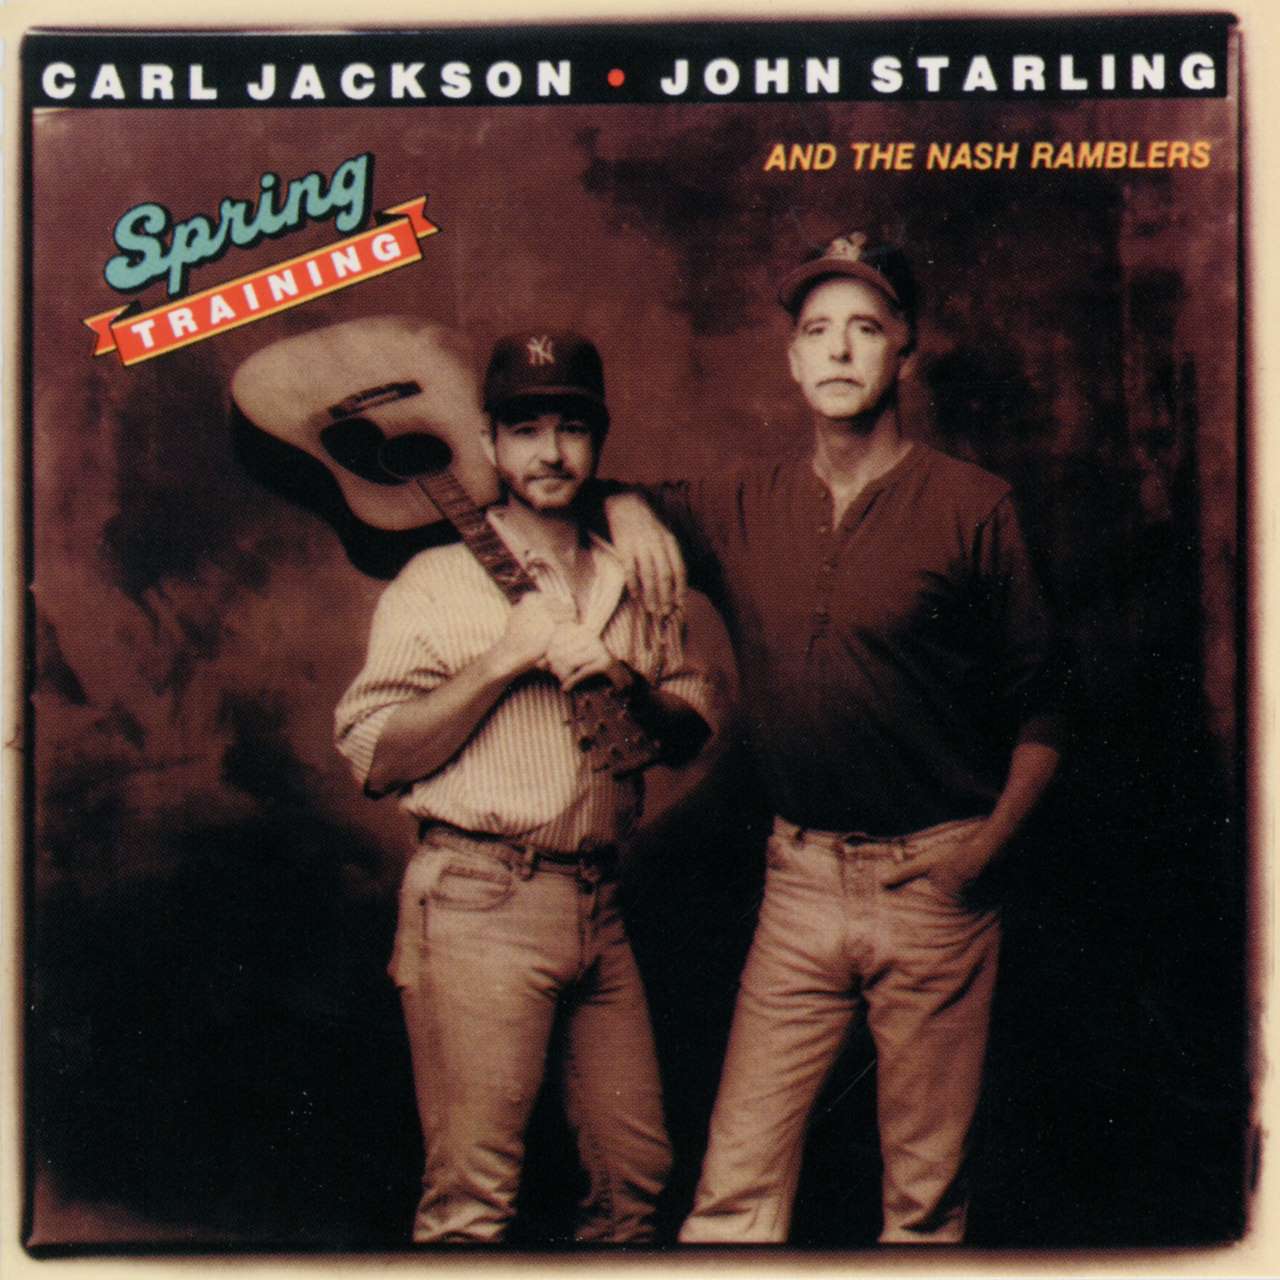 Carl Jackson, John Starling & The Nash Ramblers - Spring Training cover album